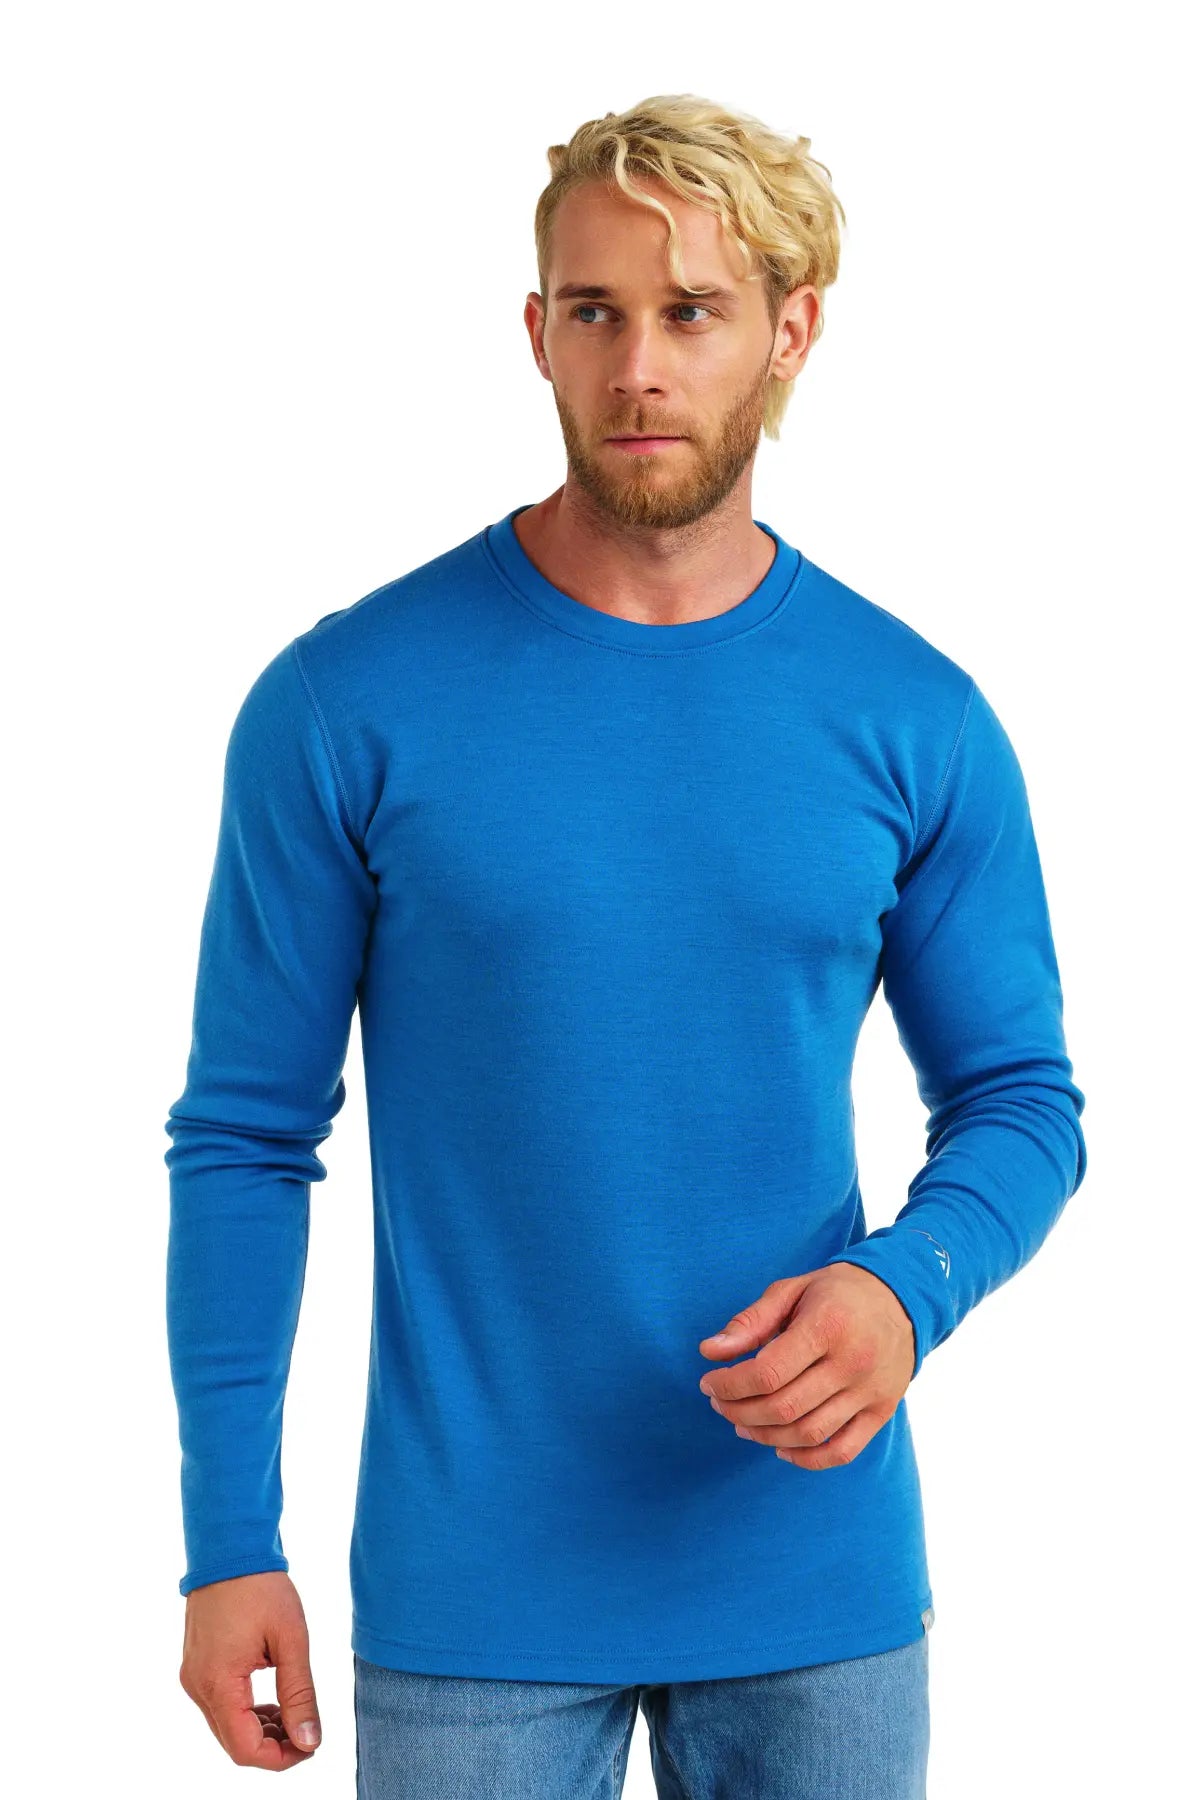 Merino Wool Long Sleeve Base Layer, Heavyweight, Thermal Underwear